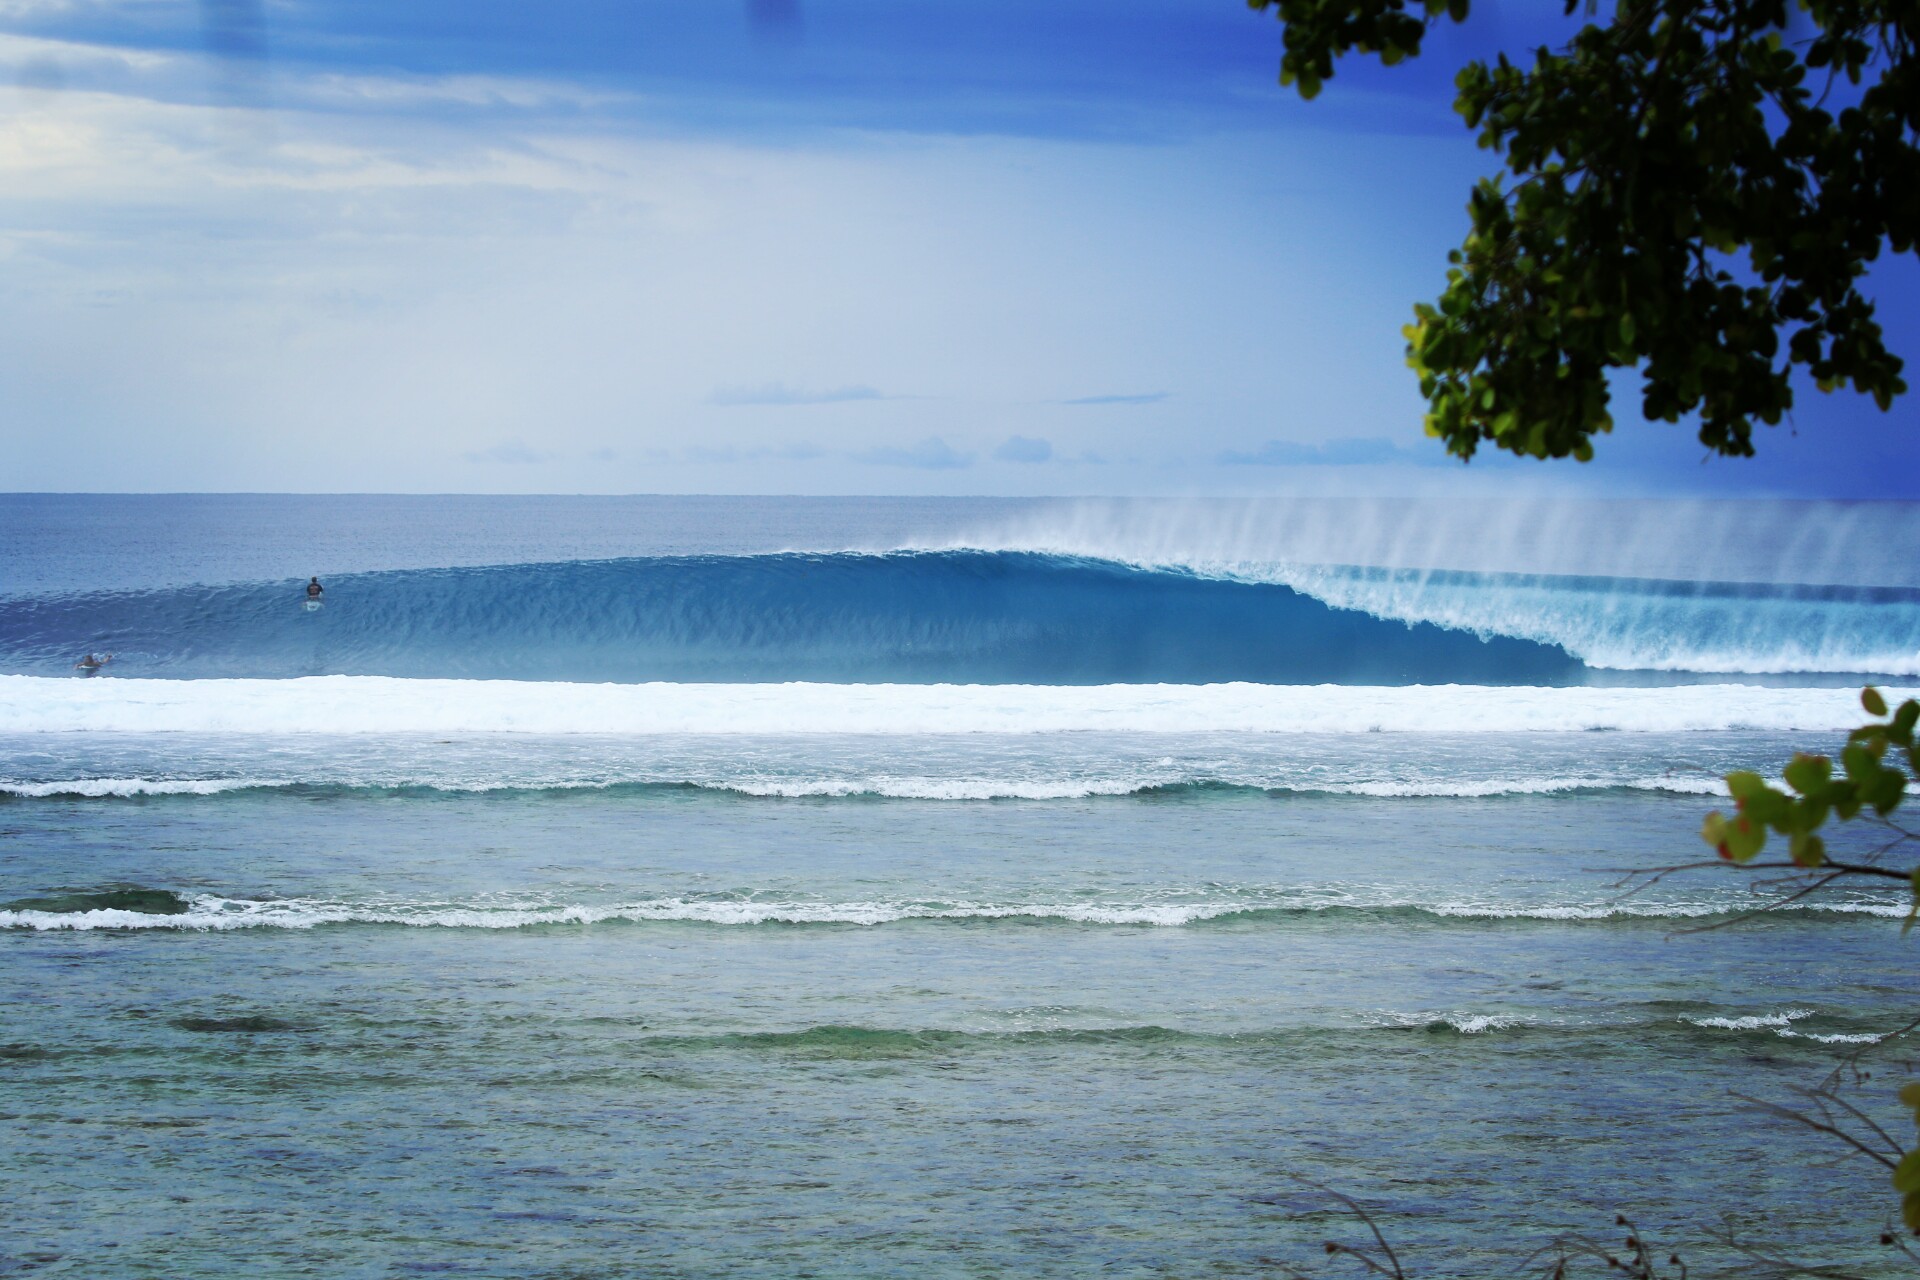 surf in mentawai islands with air manis hillside retreat padang west sumatra